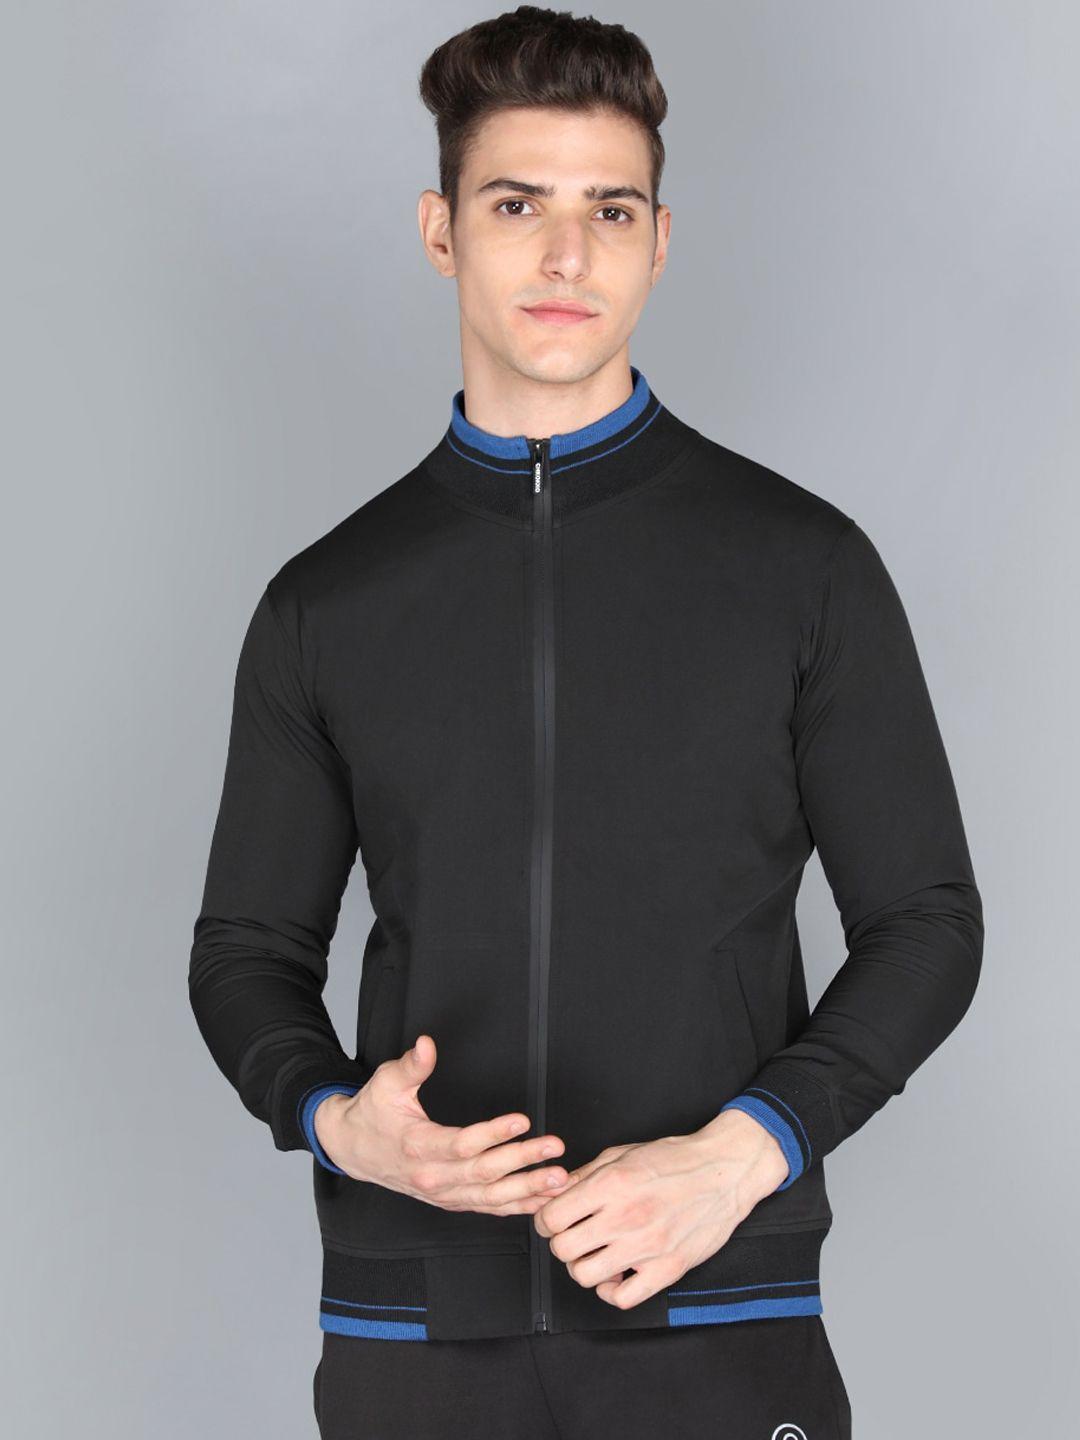 chkokko-men-black-windcheater-and-water-resistant-outdoor-sporty-jacket